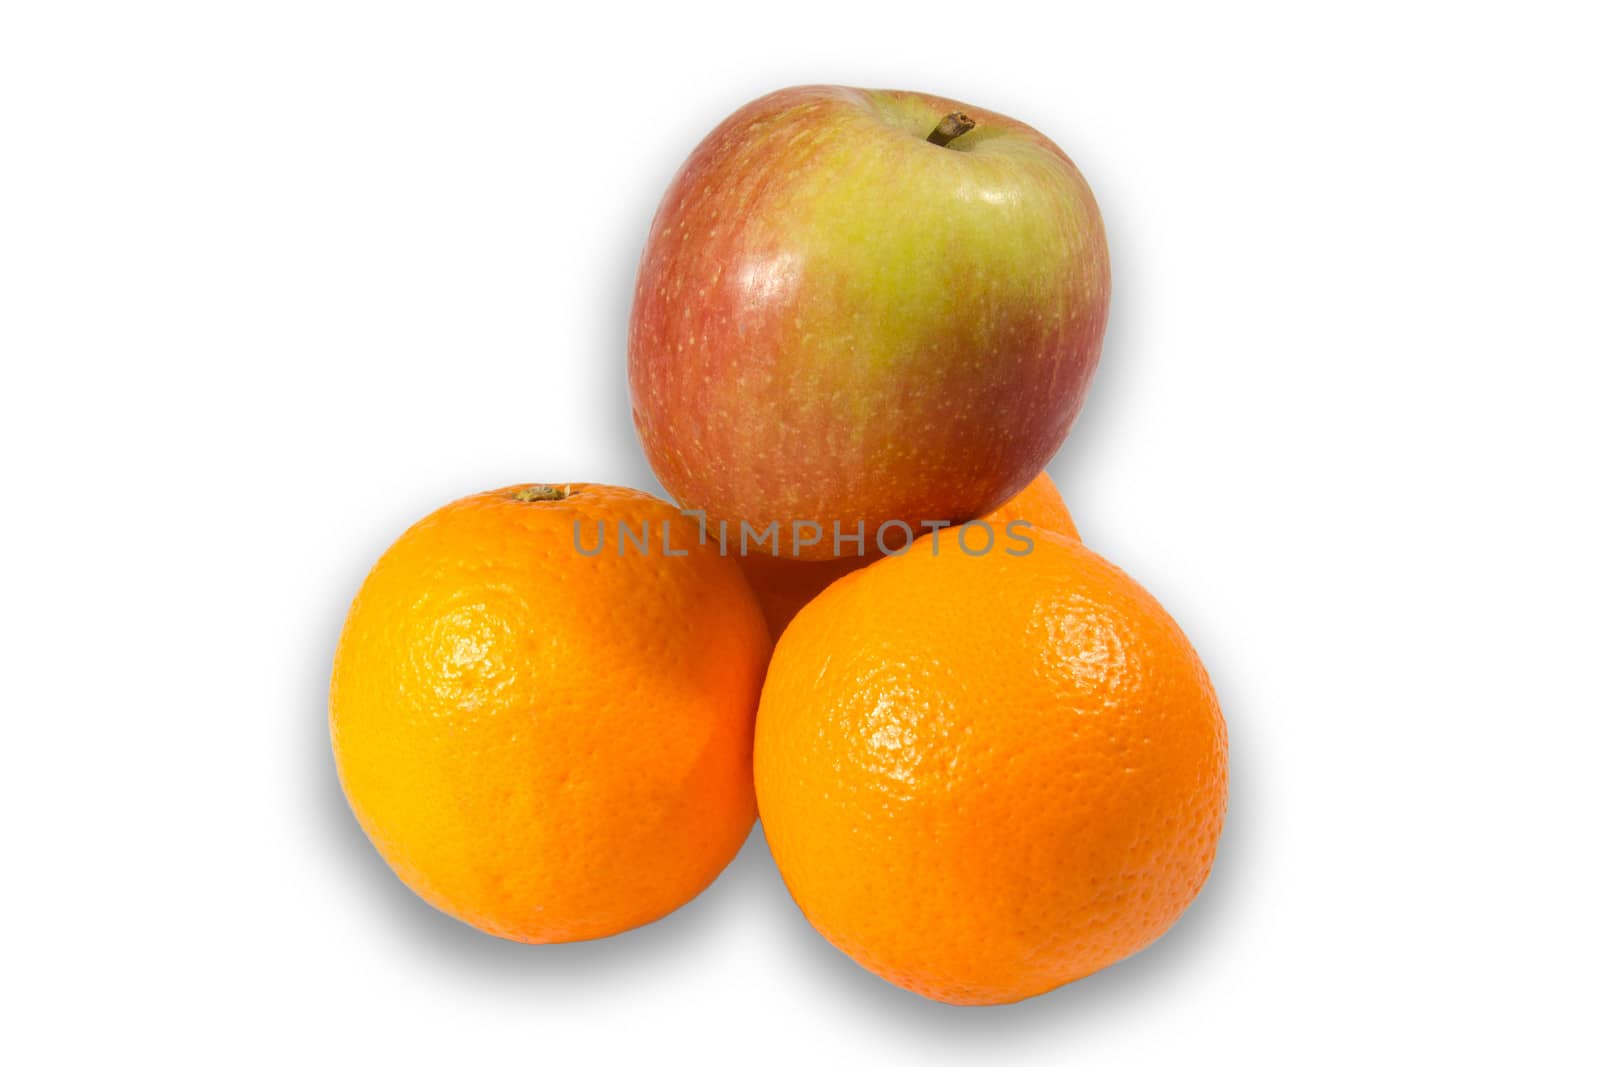 Orange and Apple creating a triangular pyramid by Cursedsenses